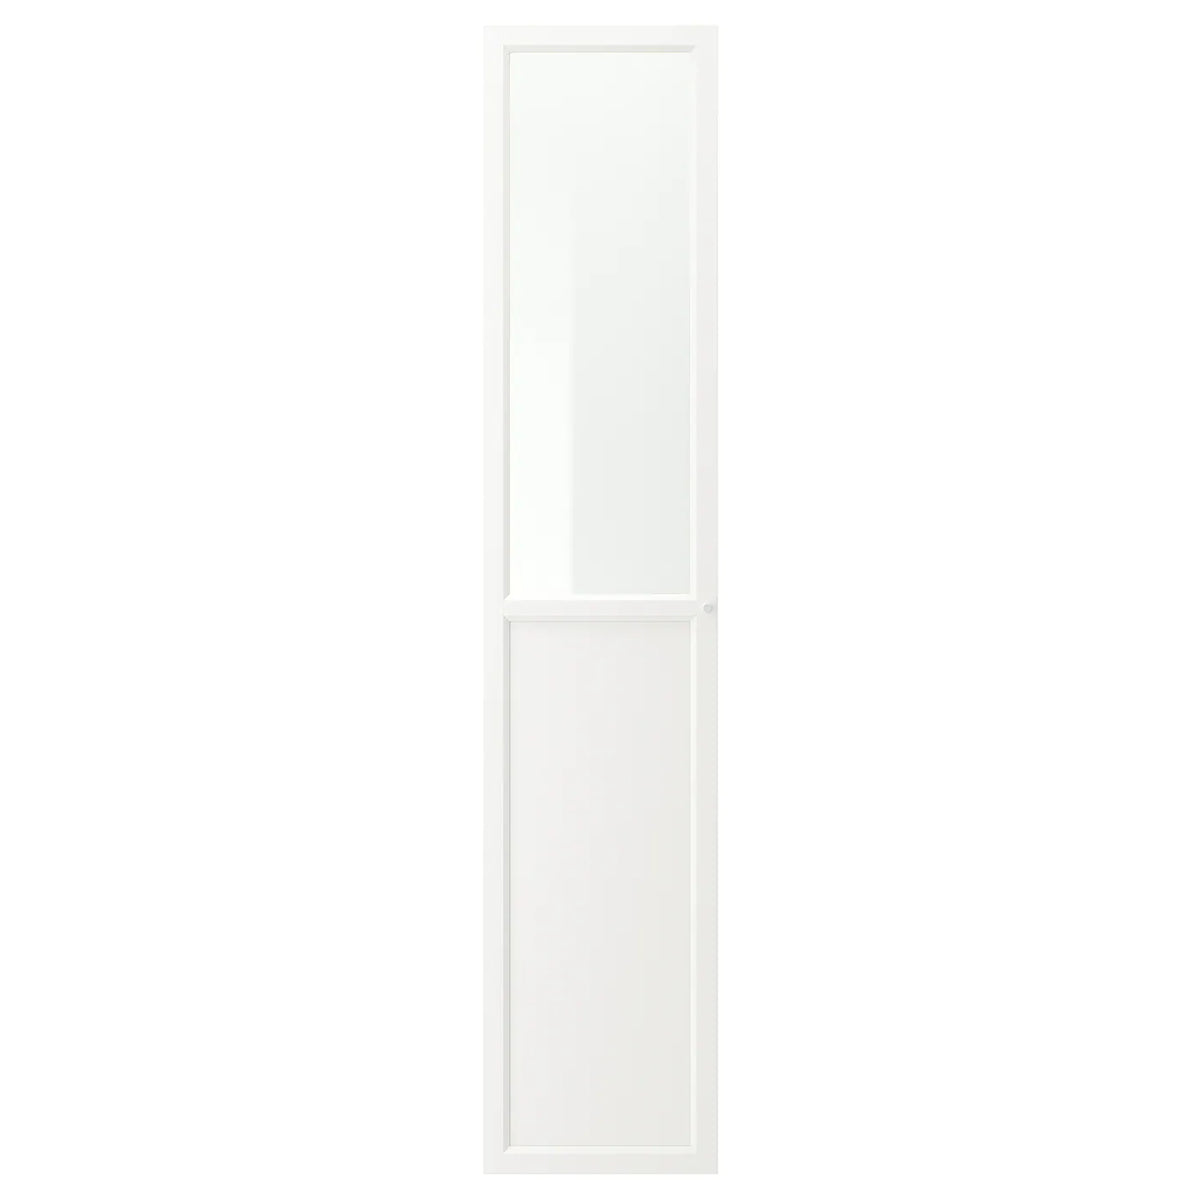 IKEA BILLY OXBERG glass/panel door, white, 40x192 cm